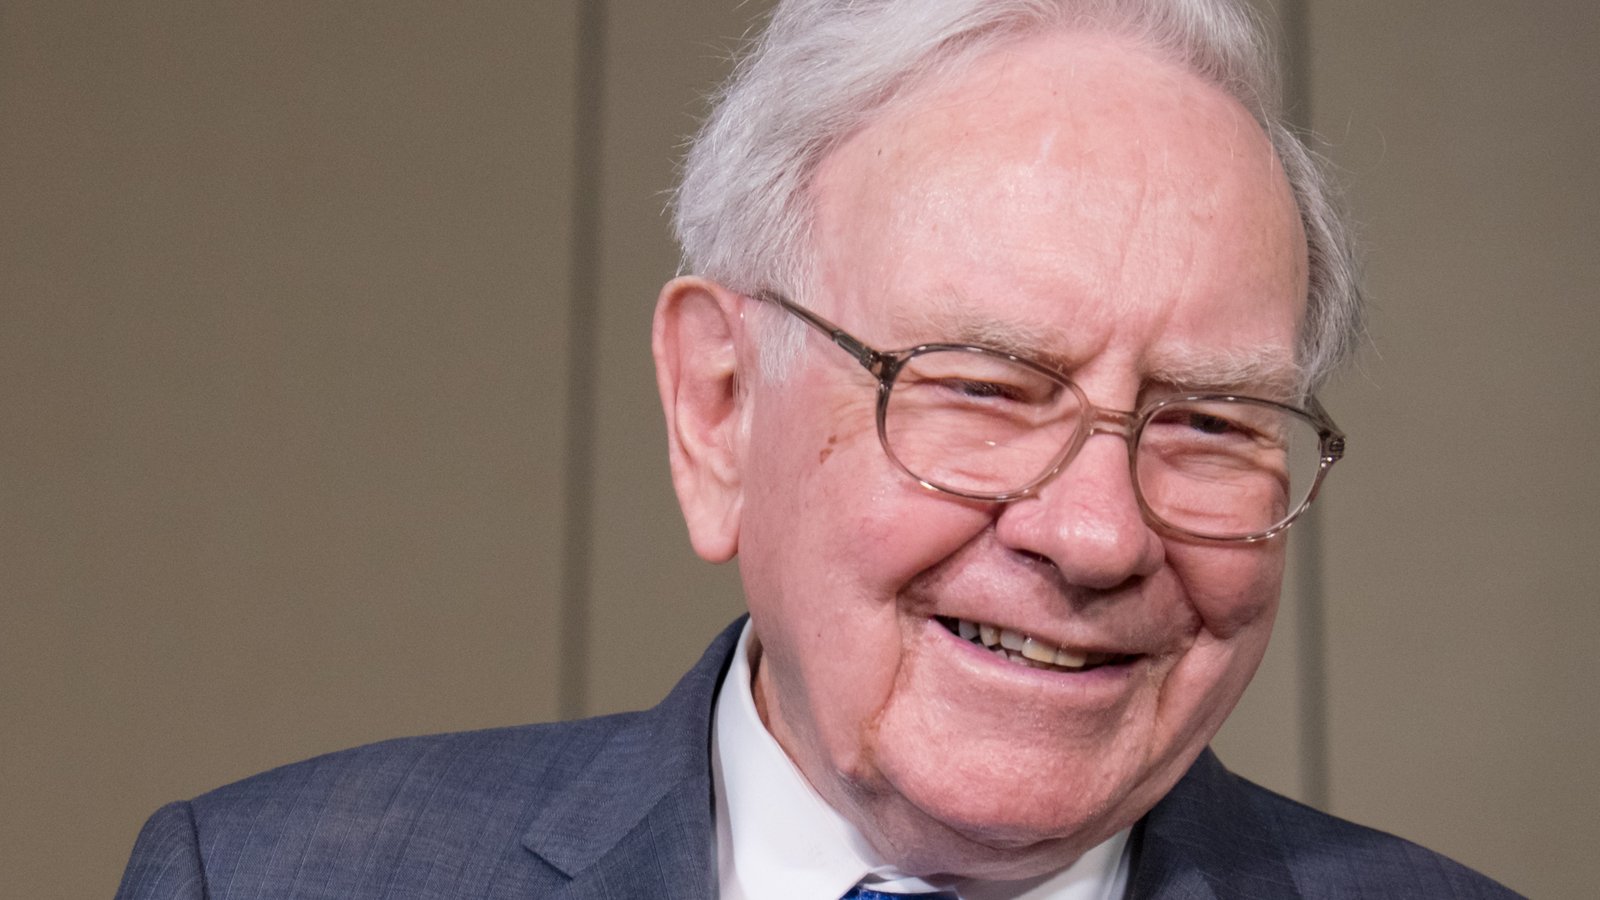 2 Stocks Warren Buffett Is Loving (and One He Let Go)